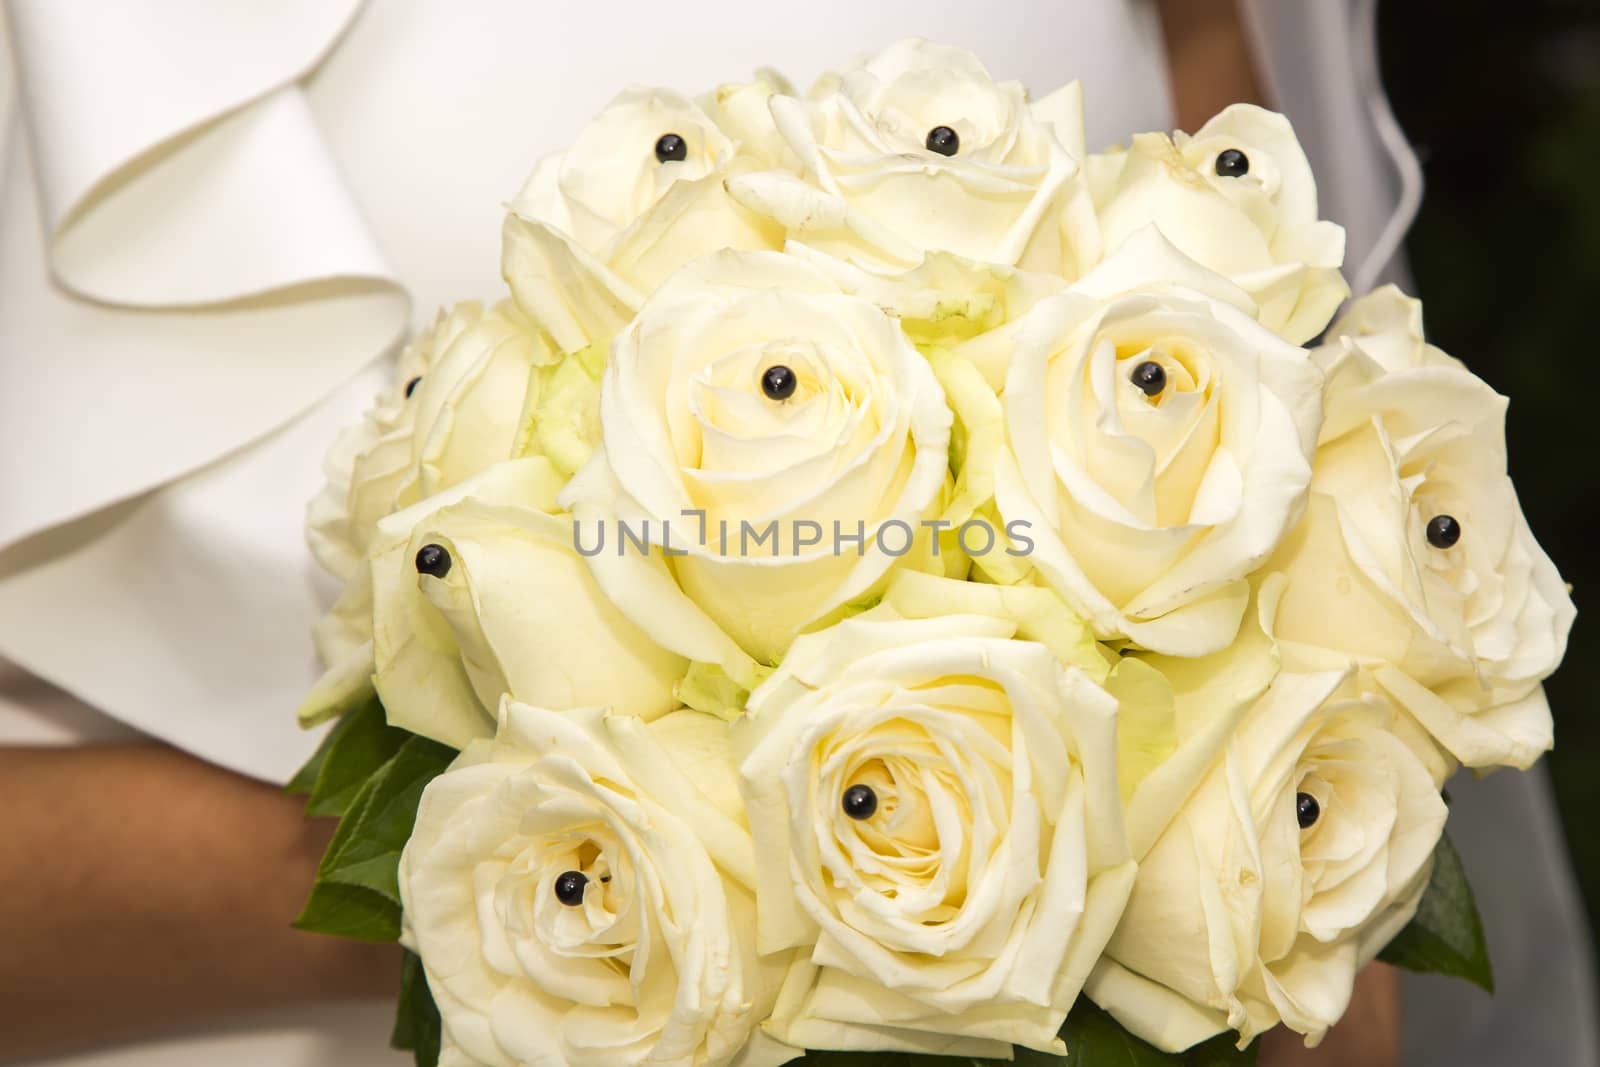 Bridal bouquet by nicobernieri